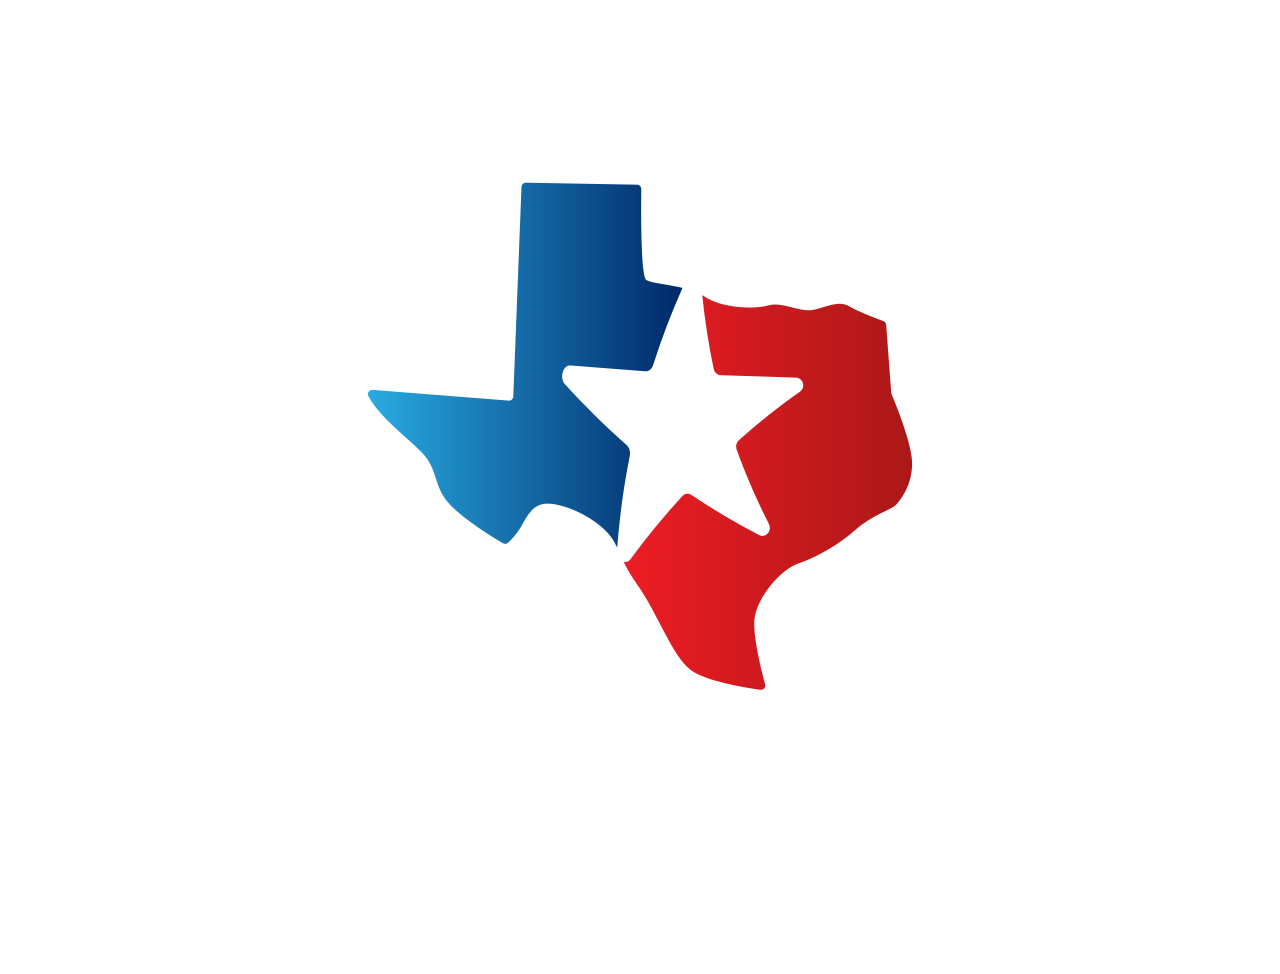 JW Construction 's logo